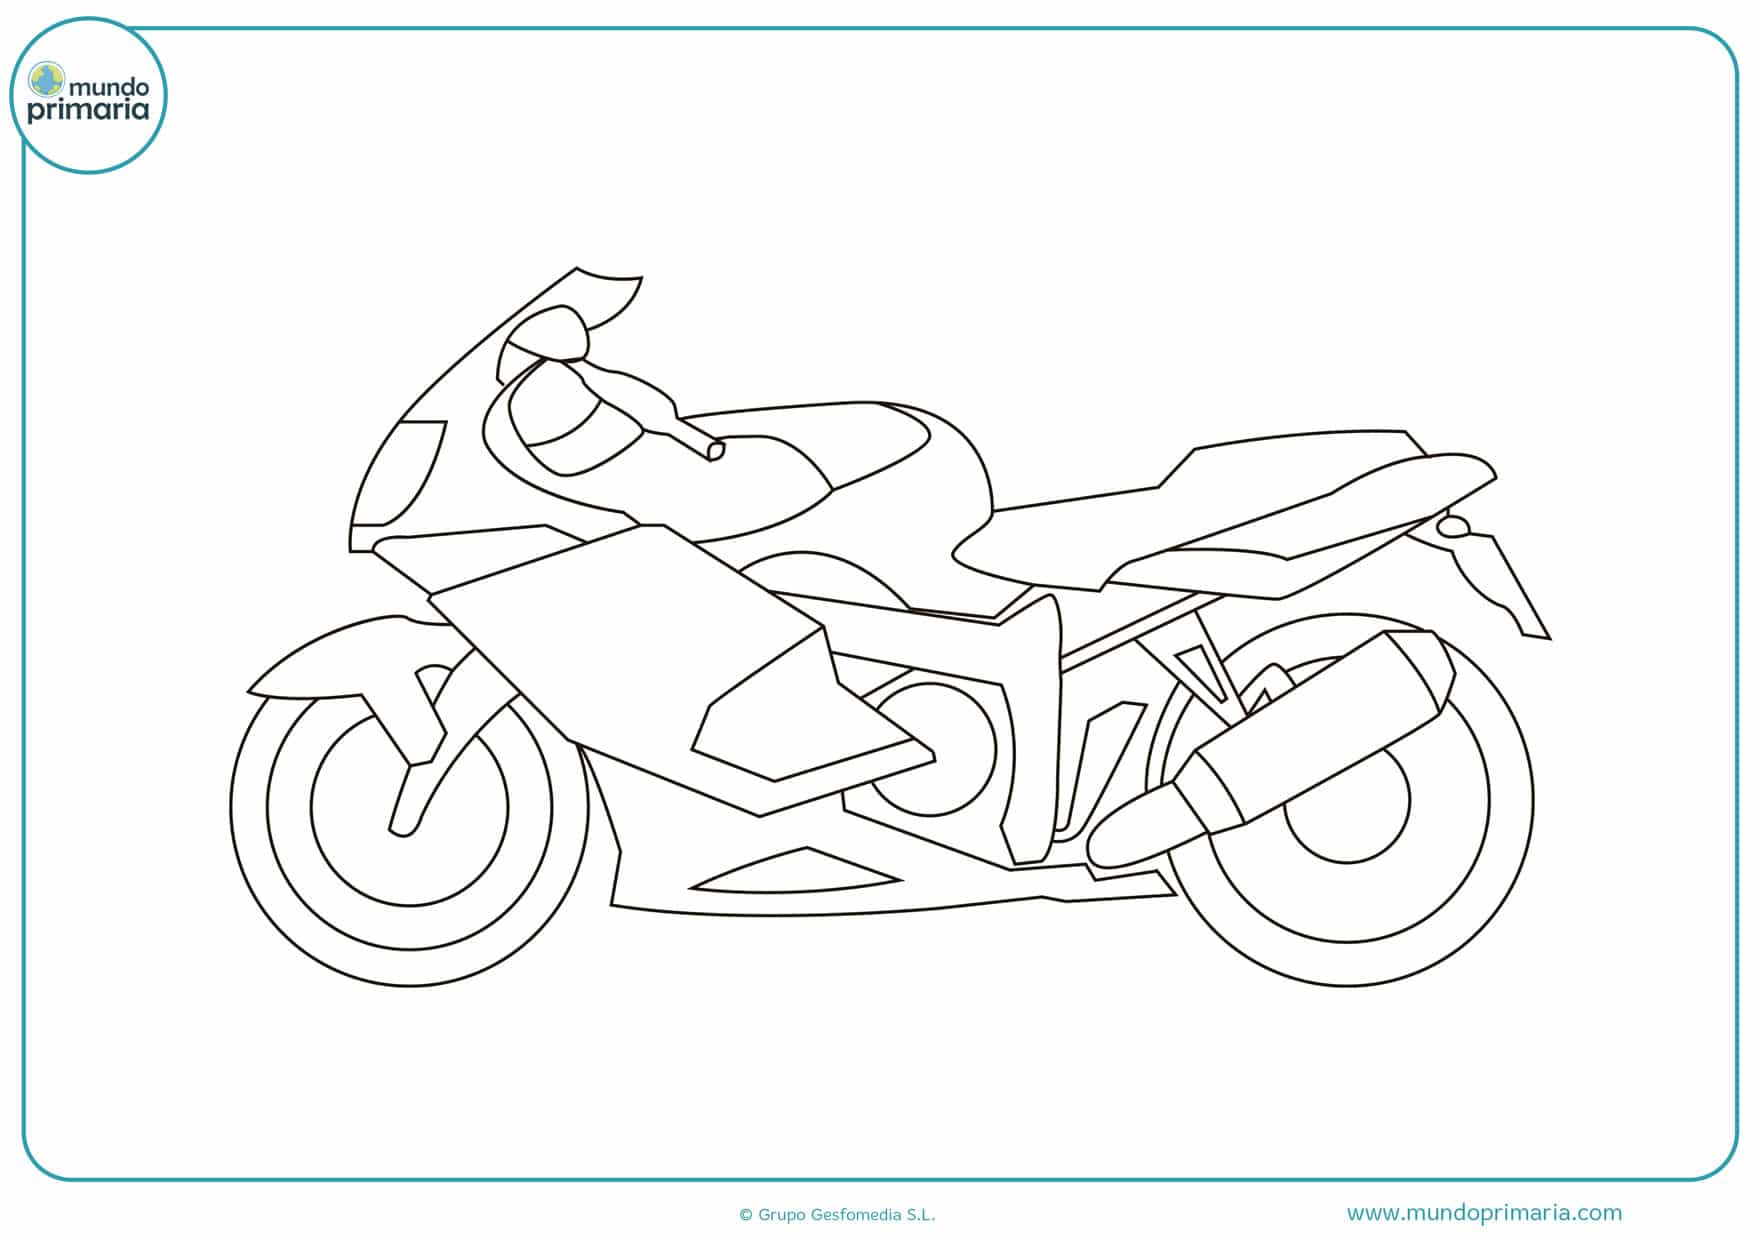 dibujos para colorear de motos gp